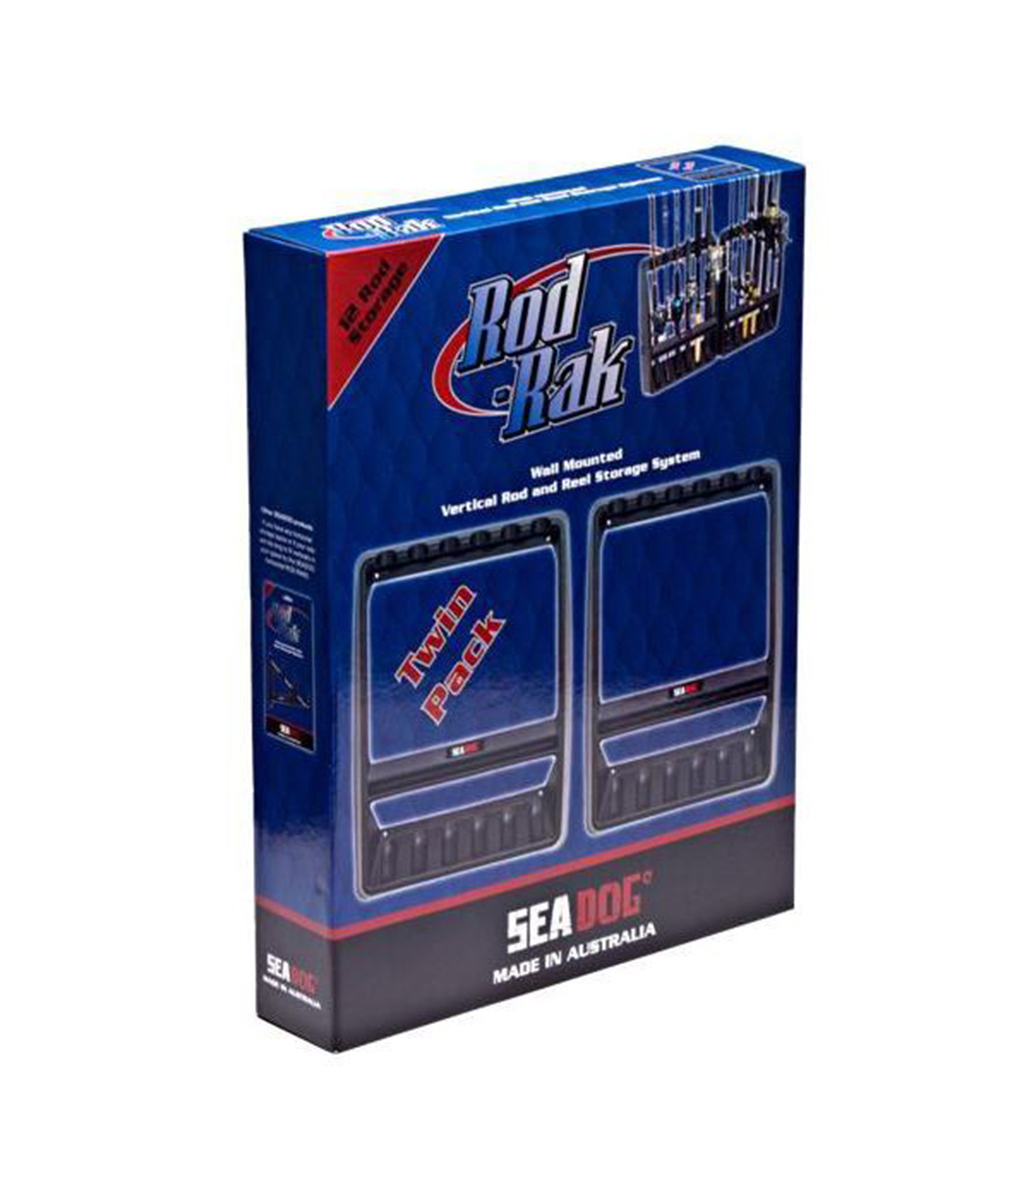 Sea Dog Vertical Rod & Reel Storage System - Rod Rack